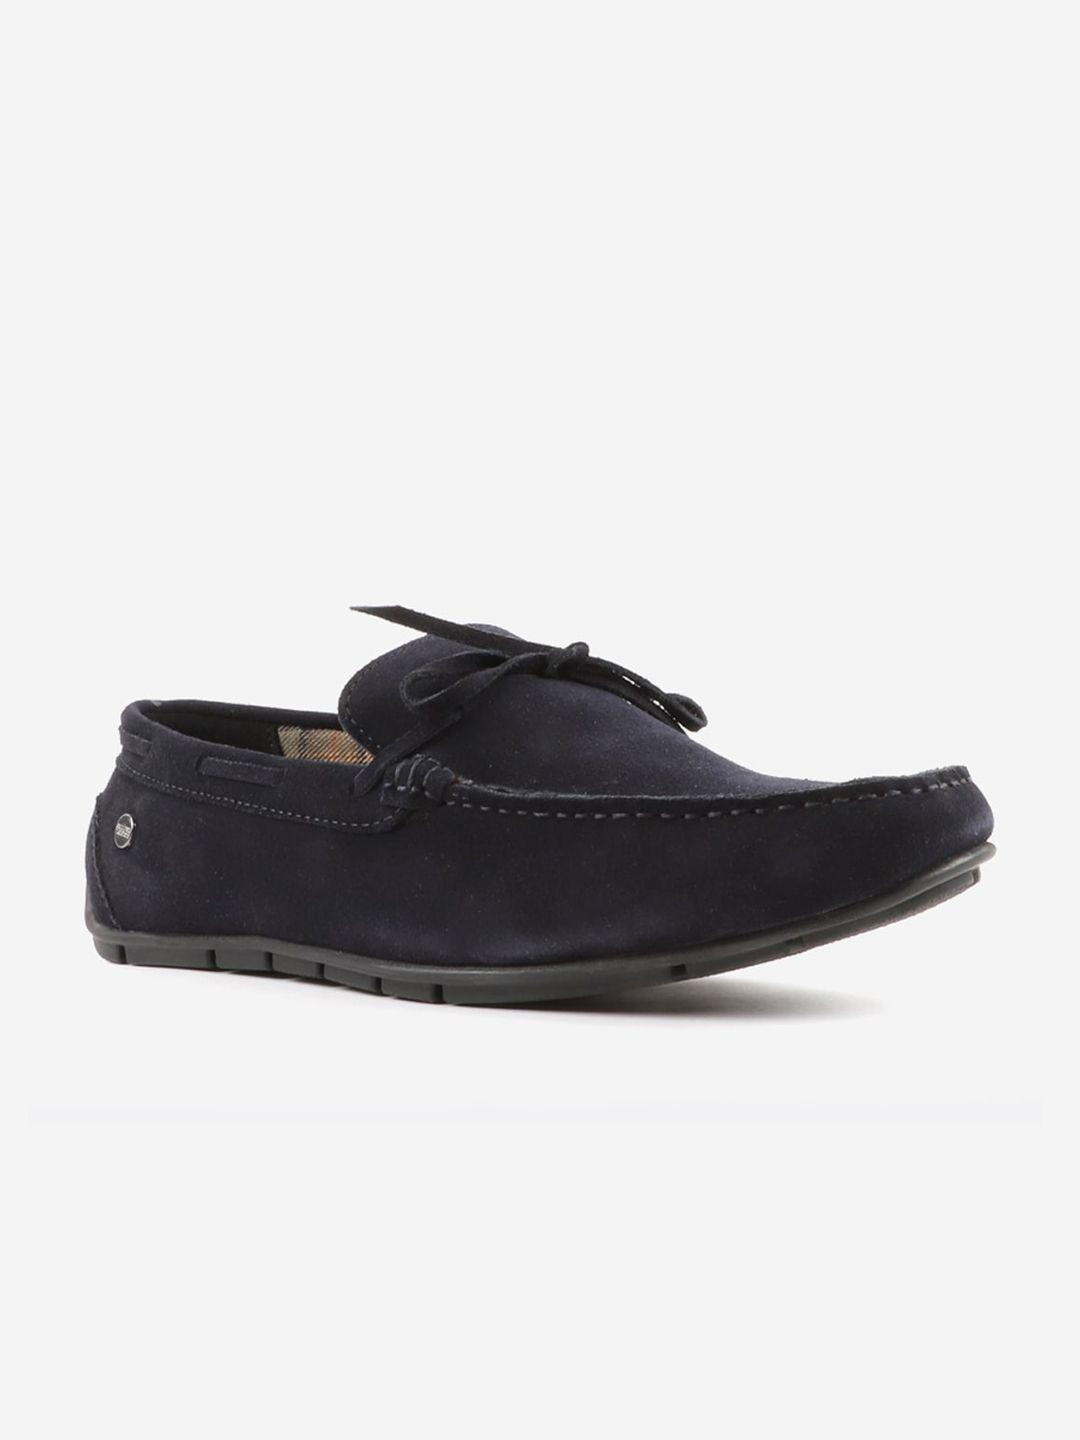 carlton london men blue leather loafer shoes